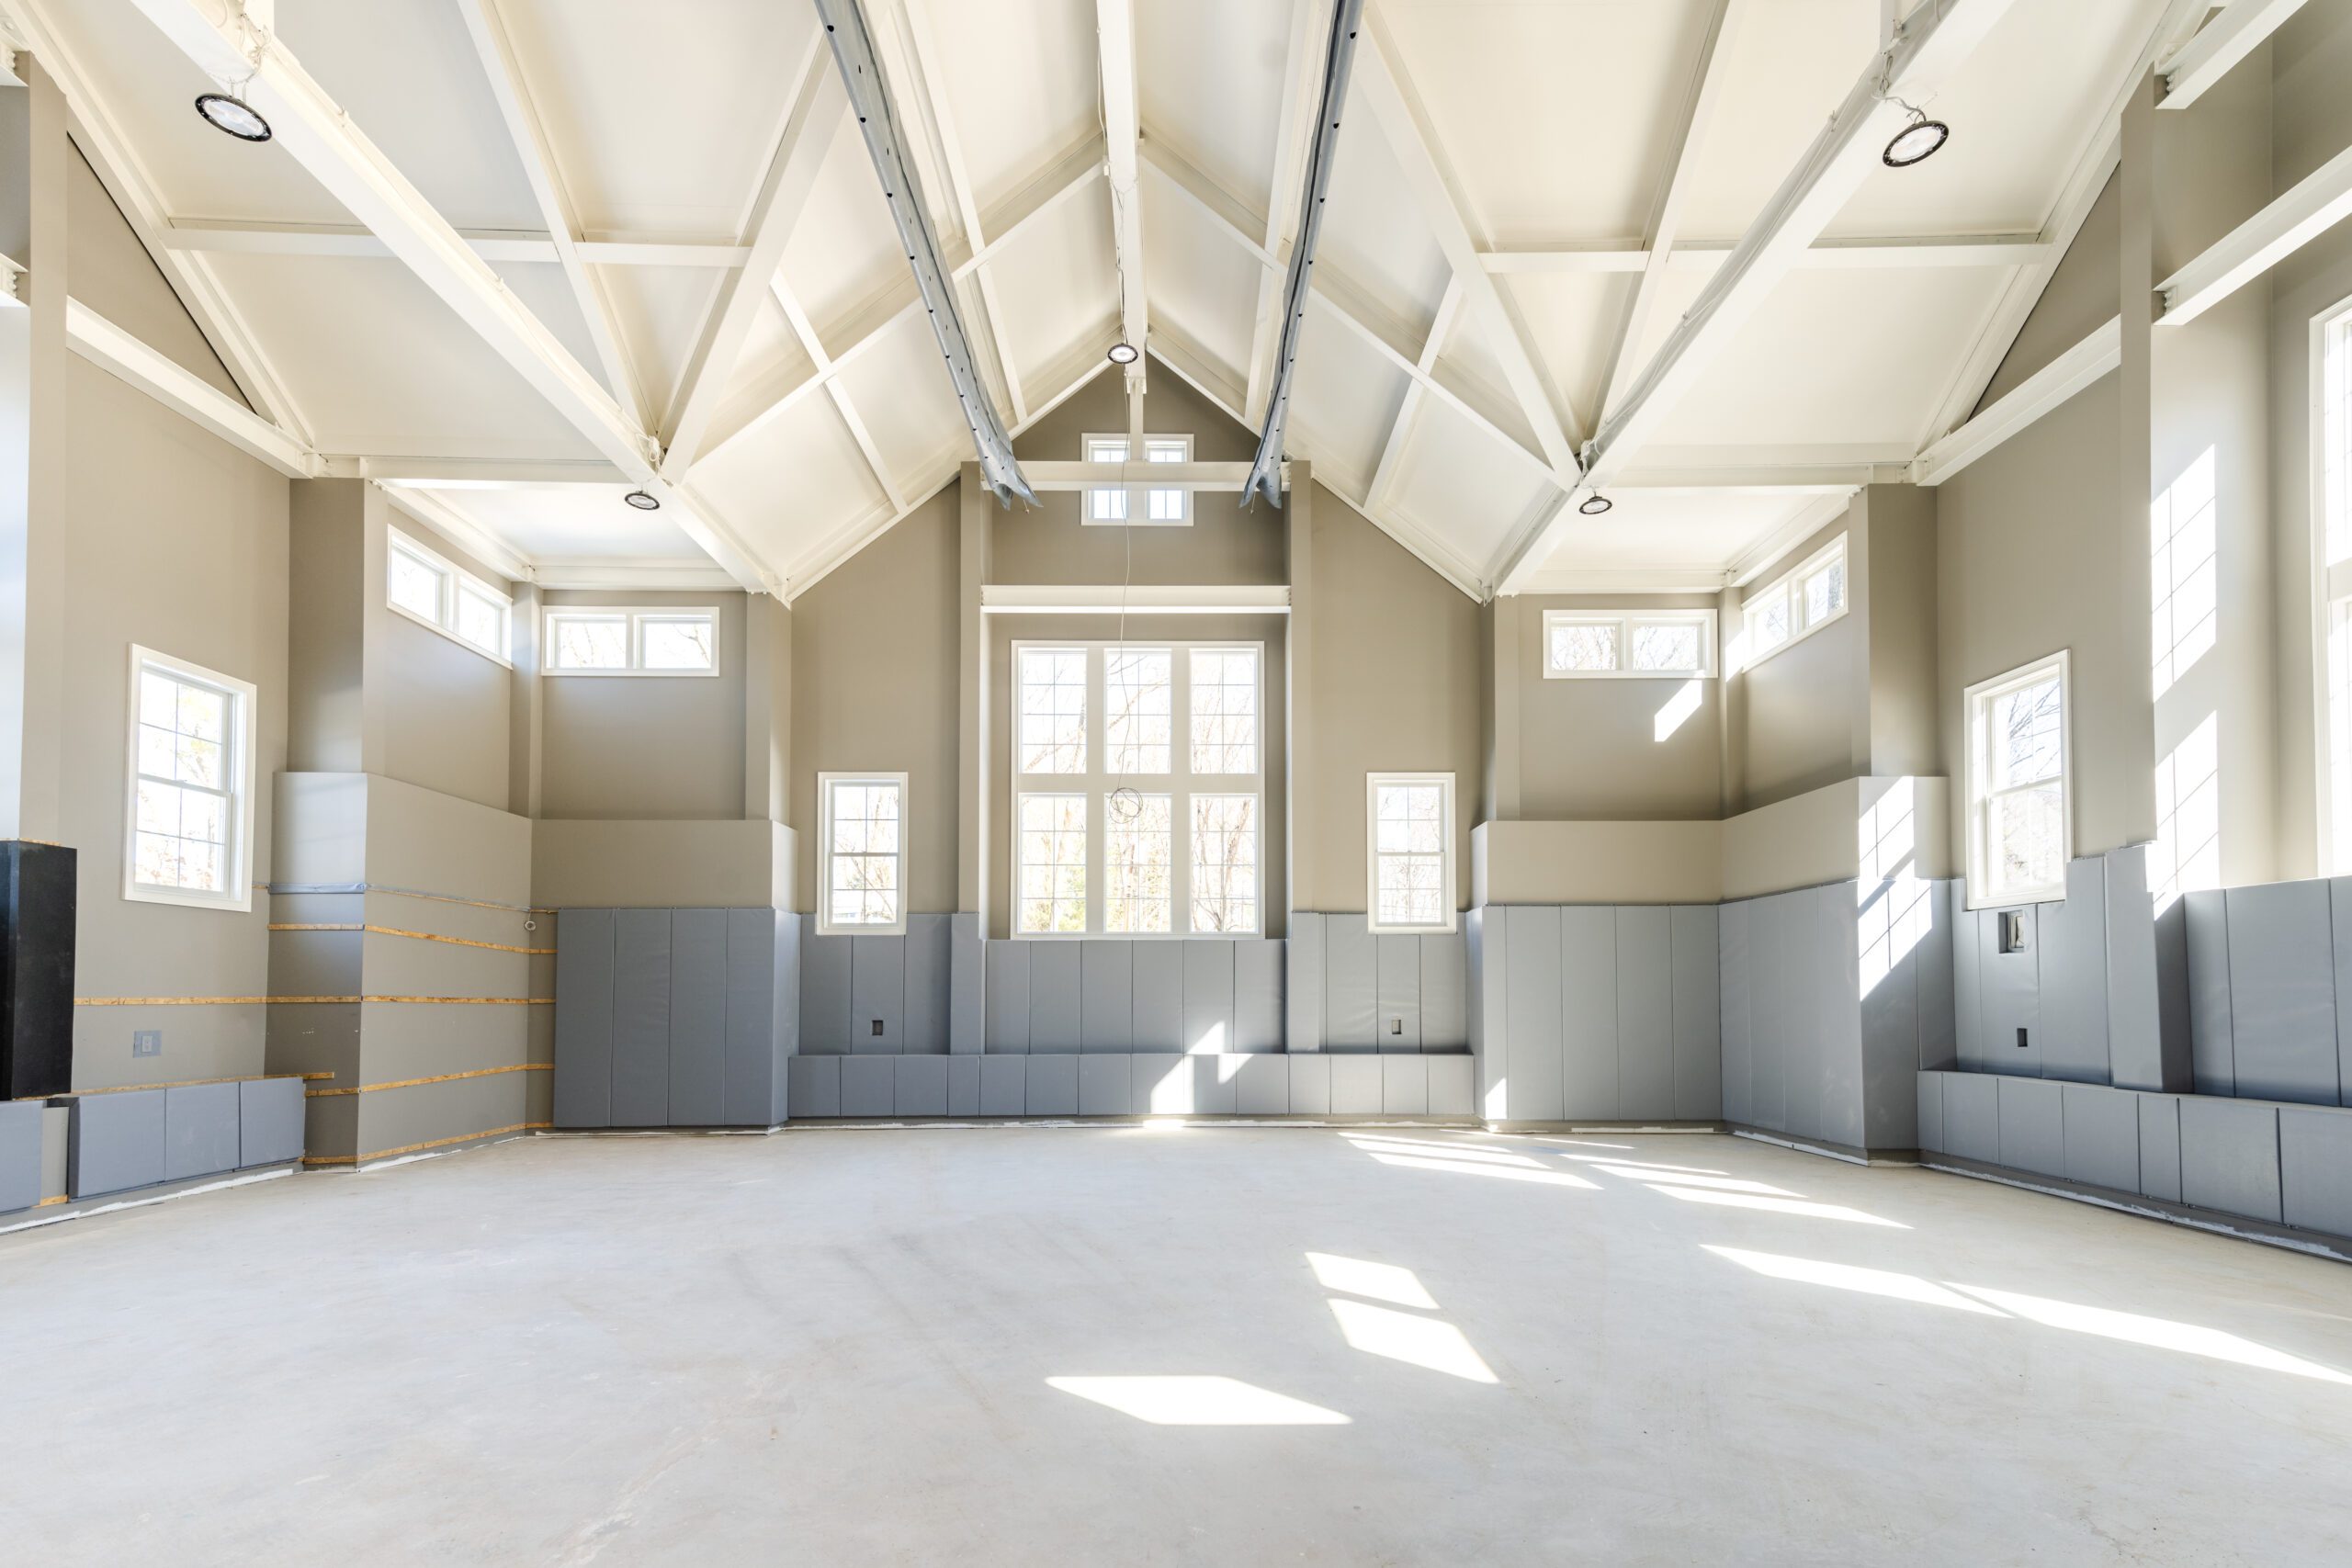 Local Clark NJ Builder creates custom home with indoor basketball court